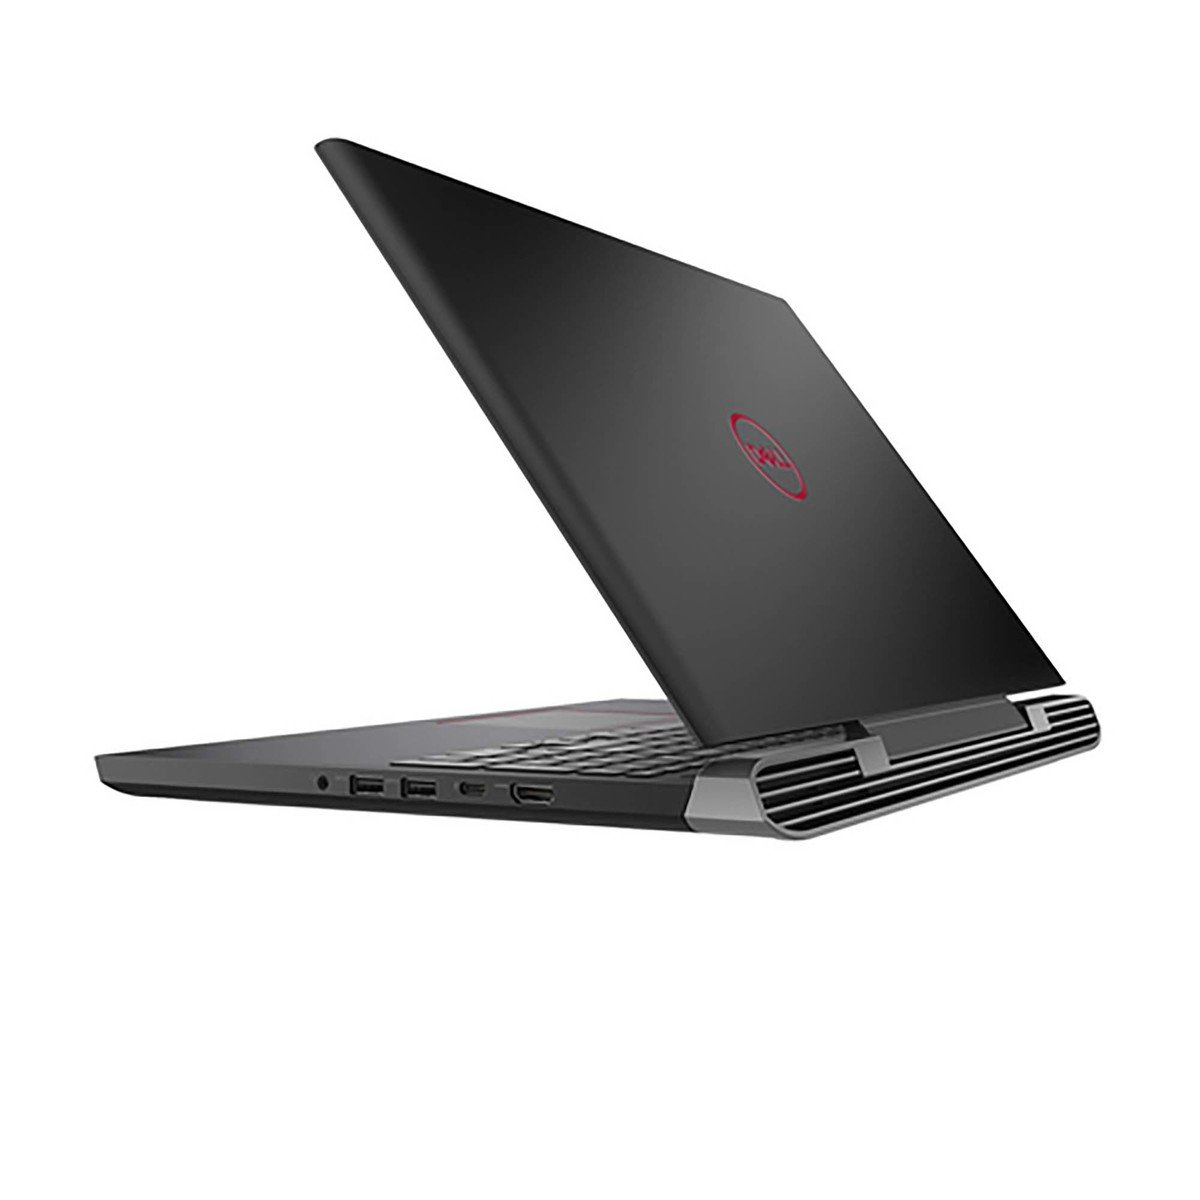 Dell G5 1189 Gaming Notebook Black (Core i7, 16GB, 1TB+256GB SSD, 15.6" FHD, 6GB NVIDIA GTX 1060Ti, Windows 10)